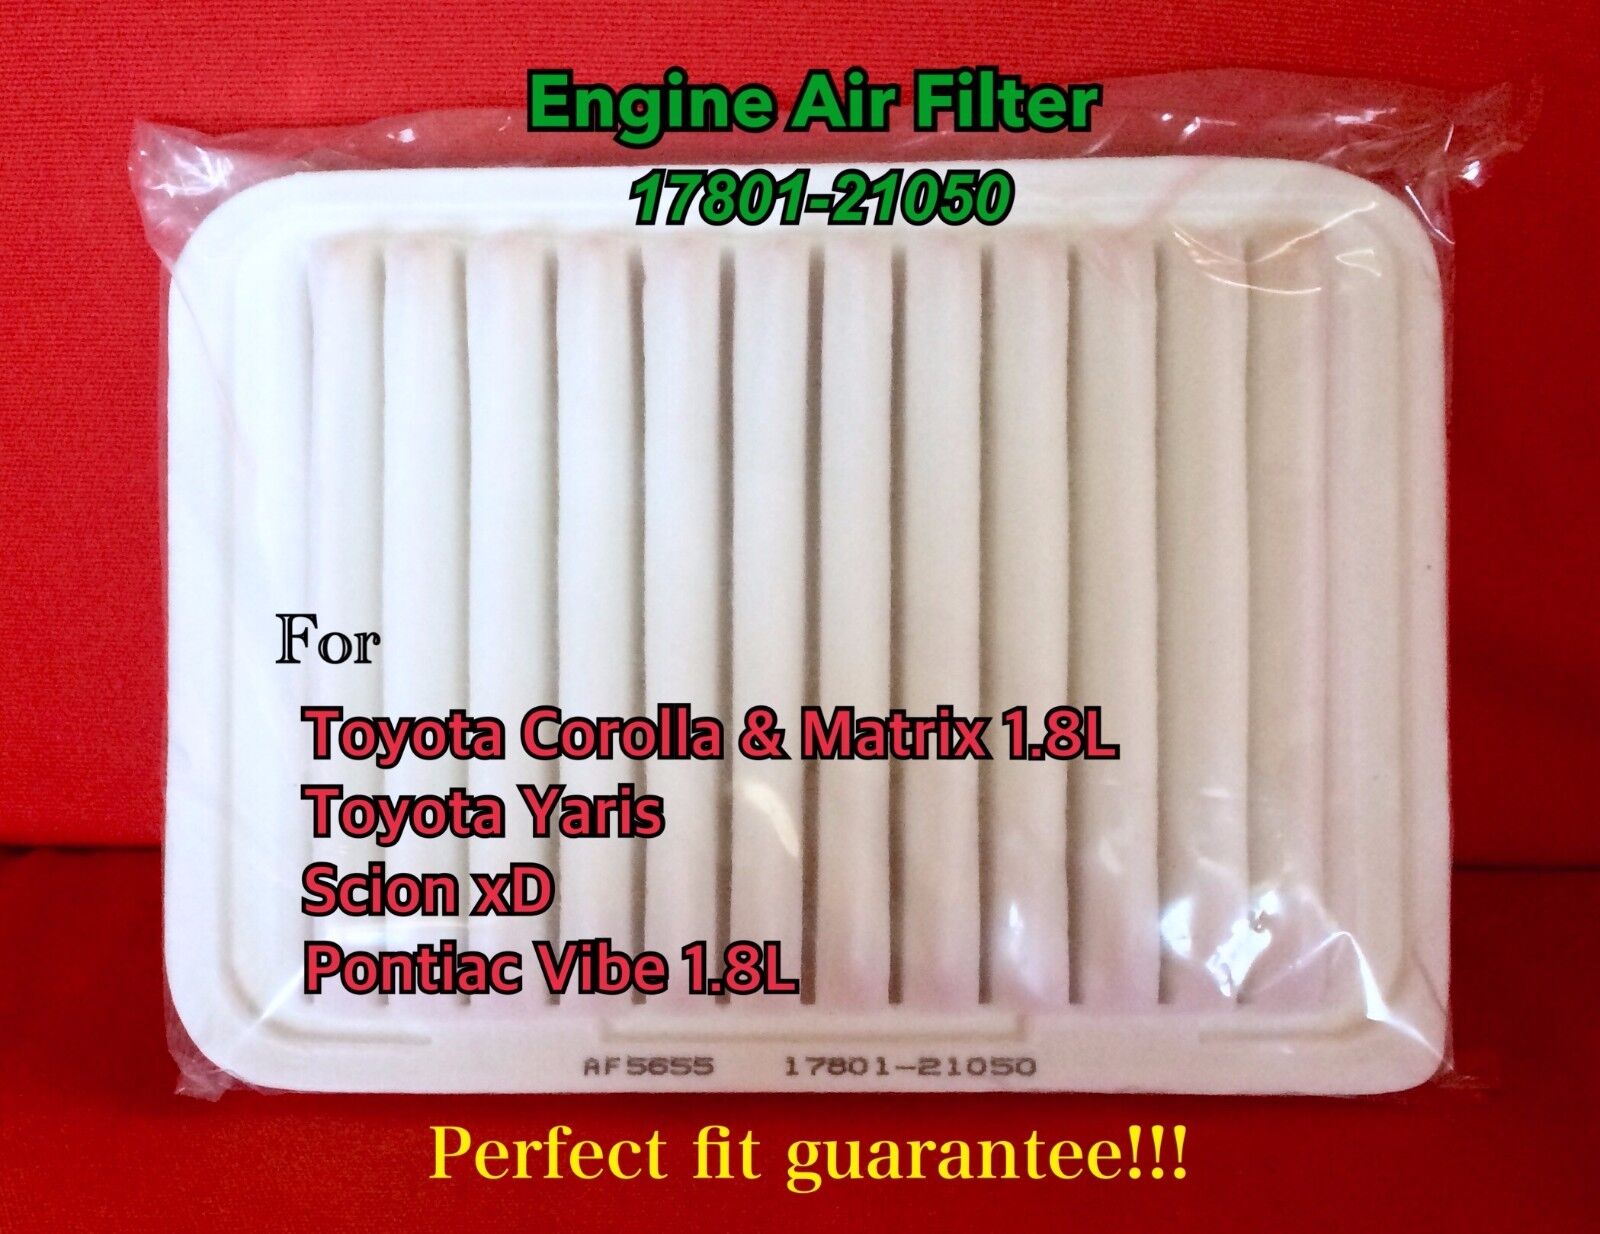 AF5655 Engine Air Filter for Toyota Corolla Matrix Yaris Pontiac Vibe & Scion xD